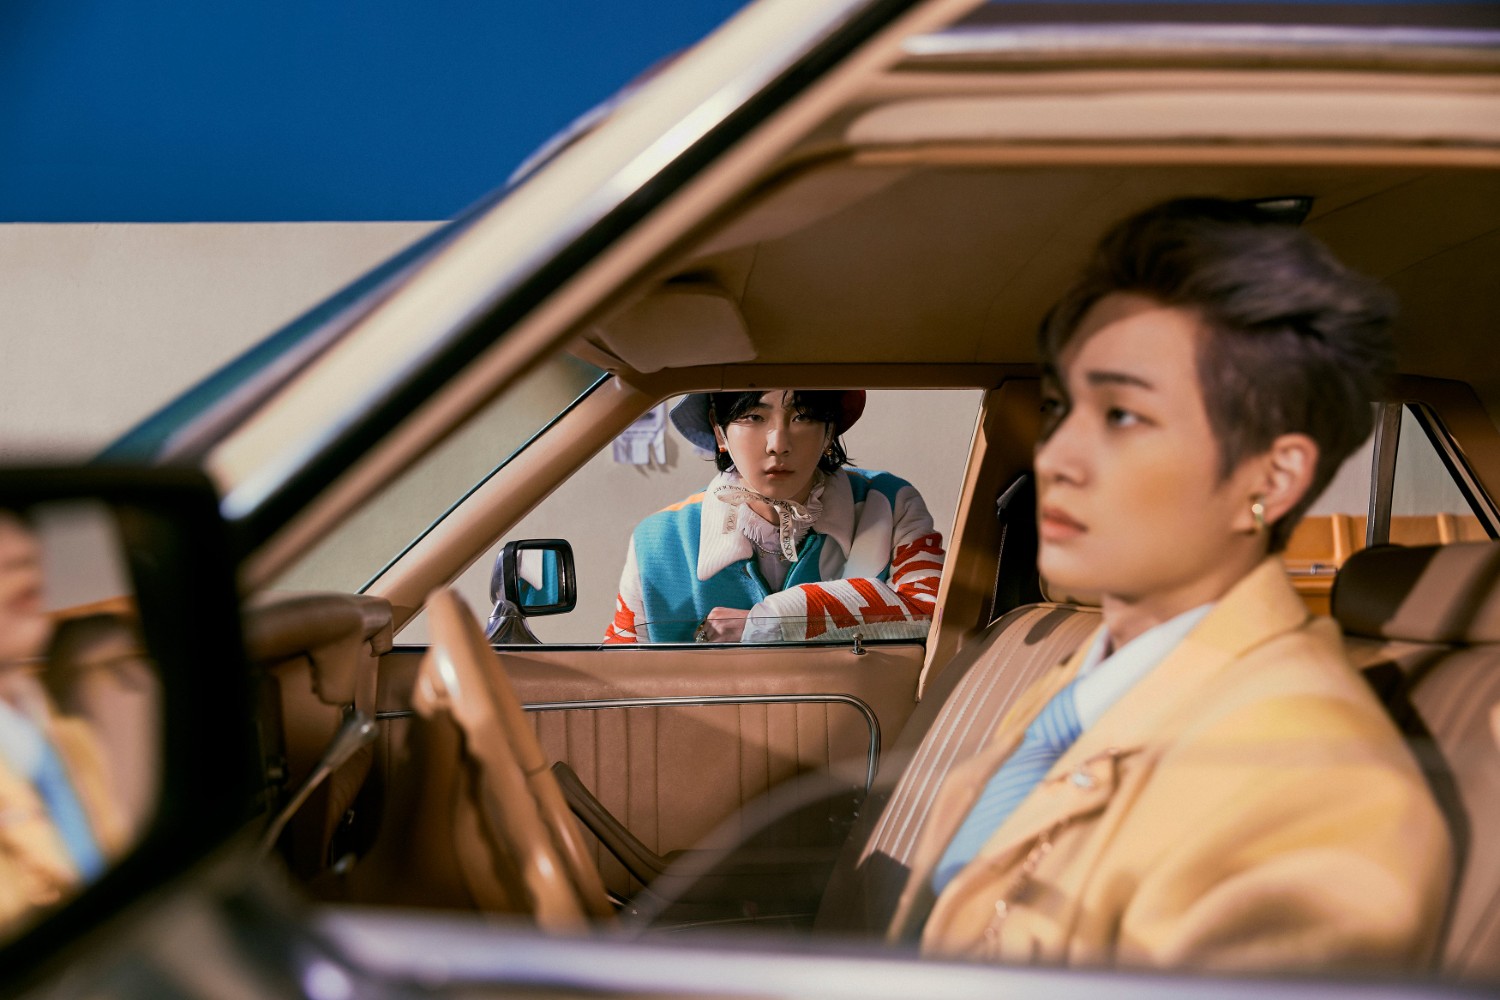 [K-POP] SHINee The 7th Album "Don't Call Me" -- Teaser Image #2 - Pantip